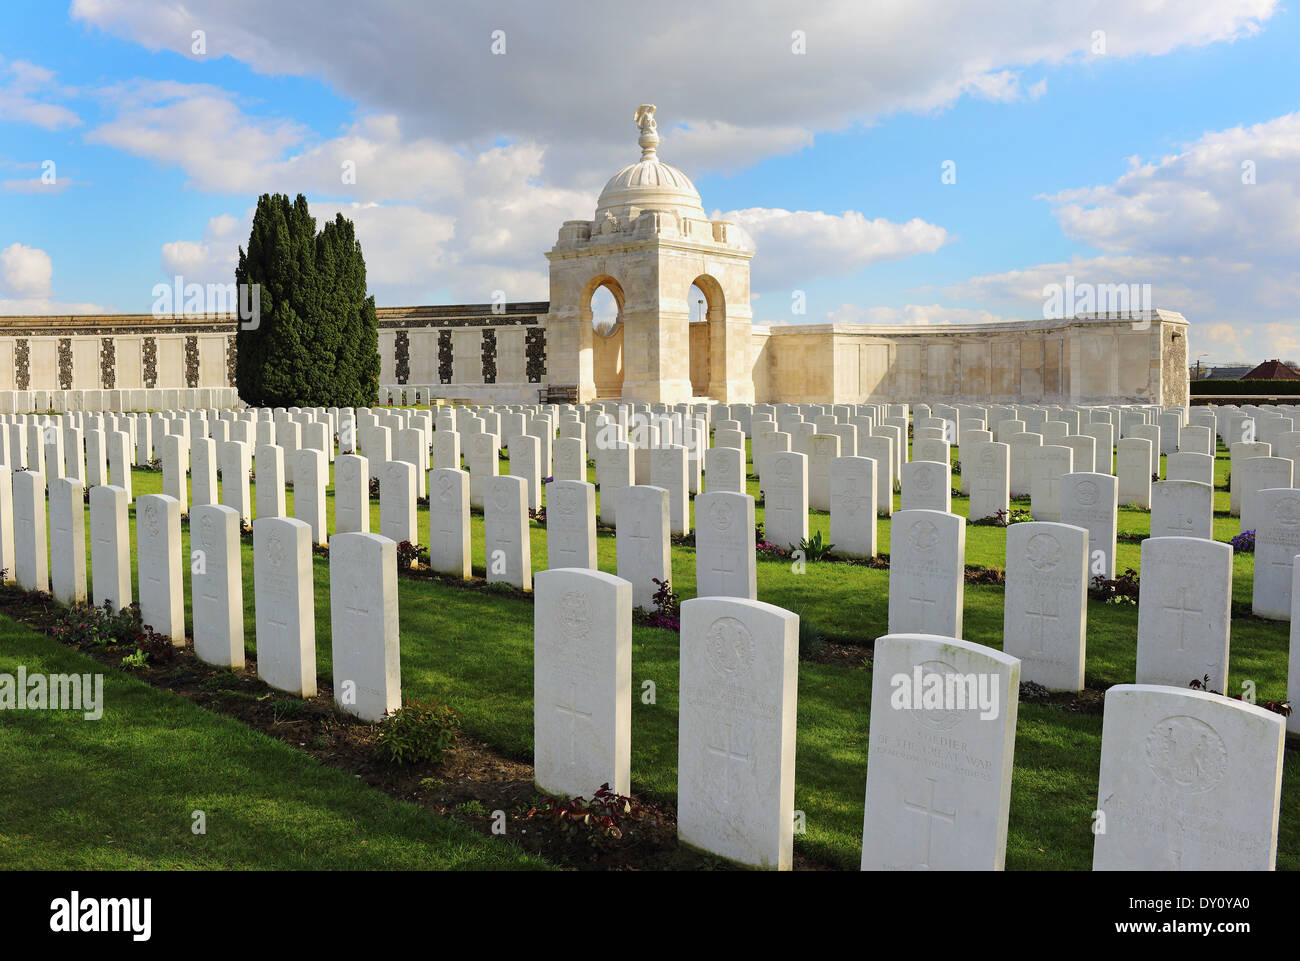 Tyne Cot World War One cemetery in Flanders Belgium Stock Photo